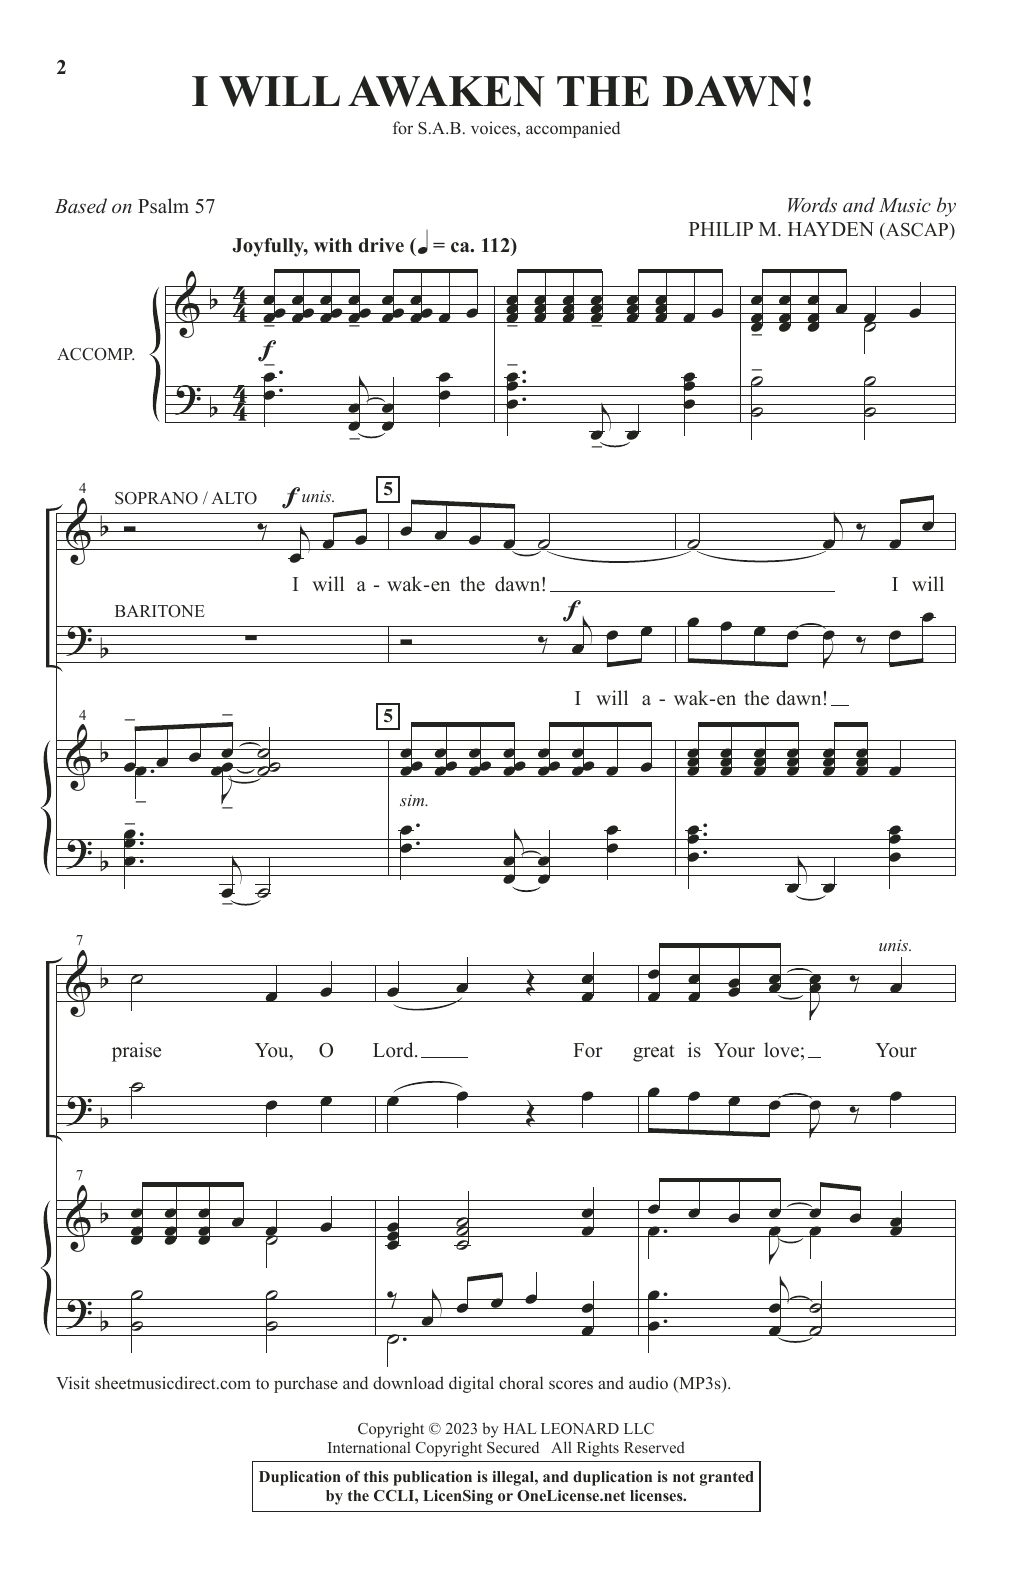 Philip M. Hayden I Will Awaken The Dawn! Sheet Music Notes & Chords for SAB Choir - Download or Print PDF